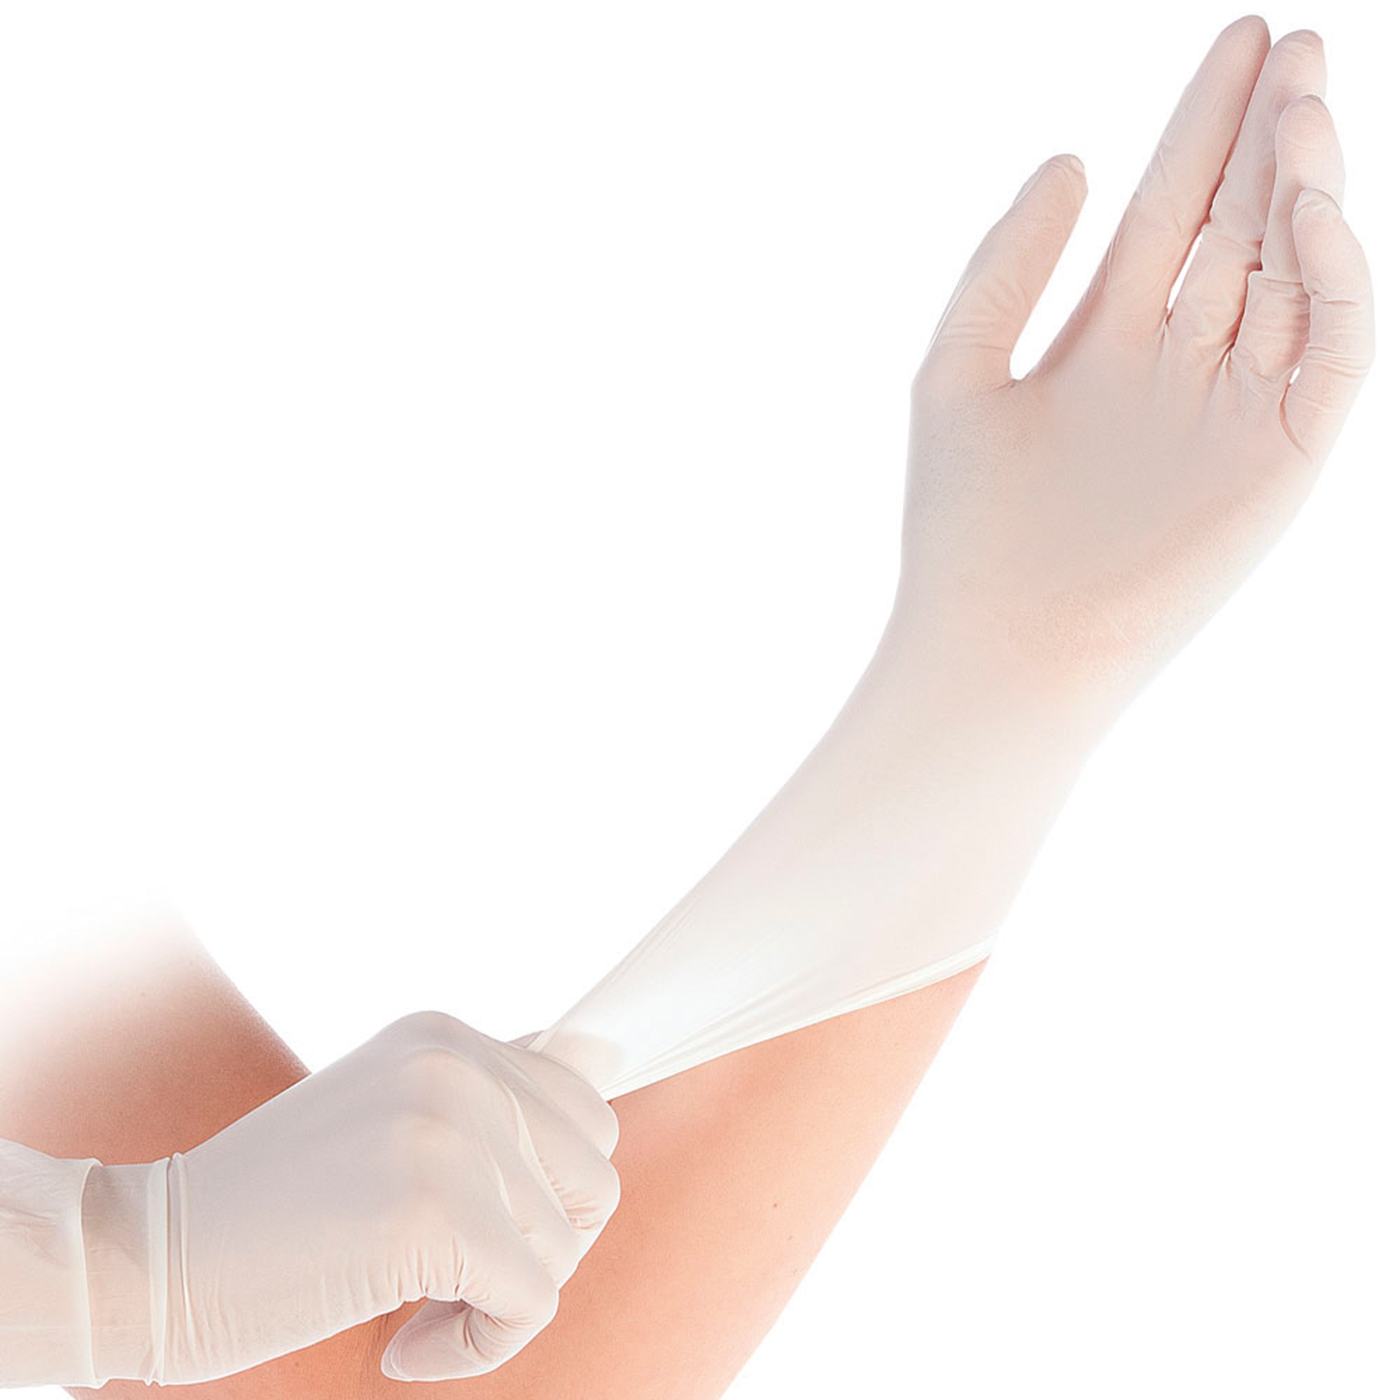 Hygostar Safe Light Nitrile Gloves, size XL, white - 100 pieces